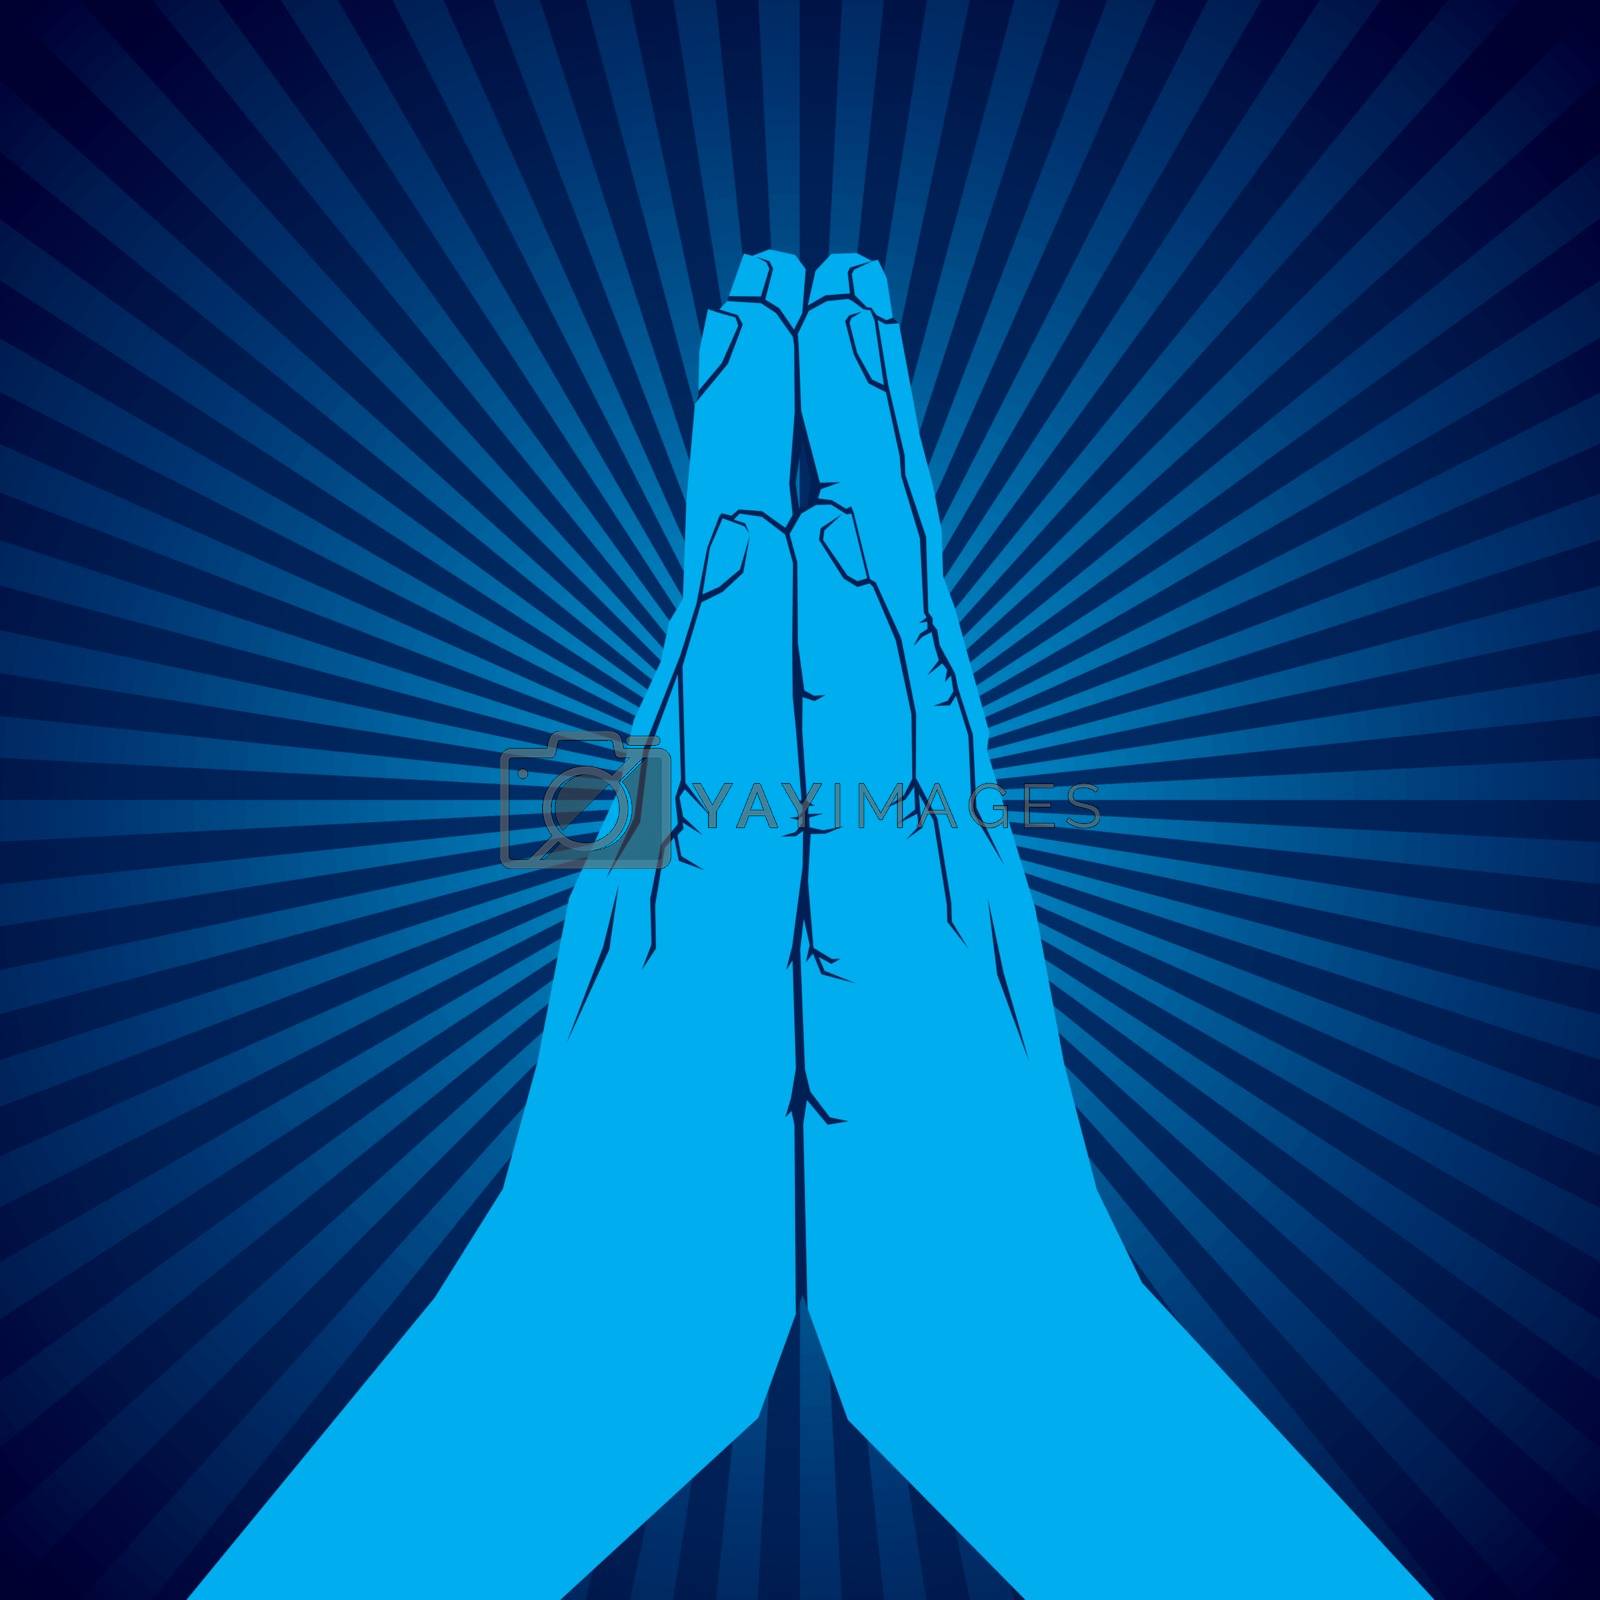 Namaste Hand PNG Transparent Images Free Download | Vector Files | Pngtree